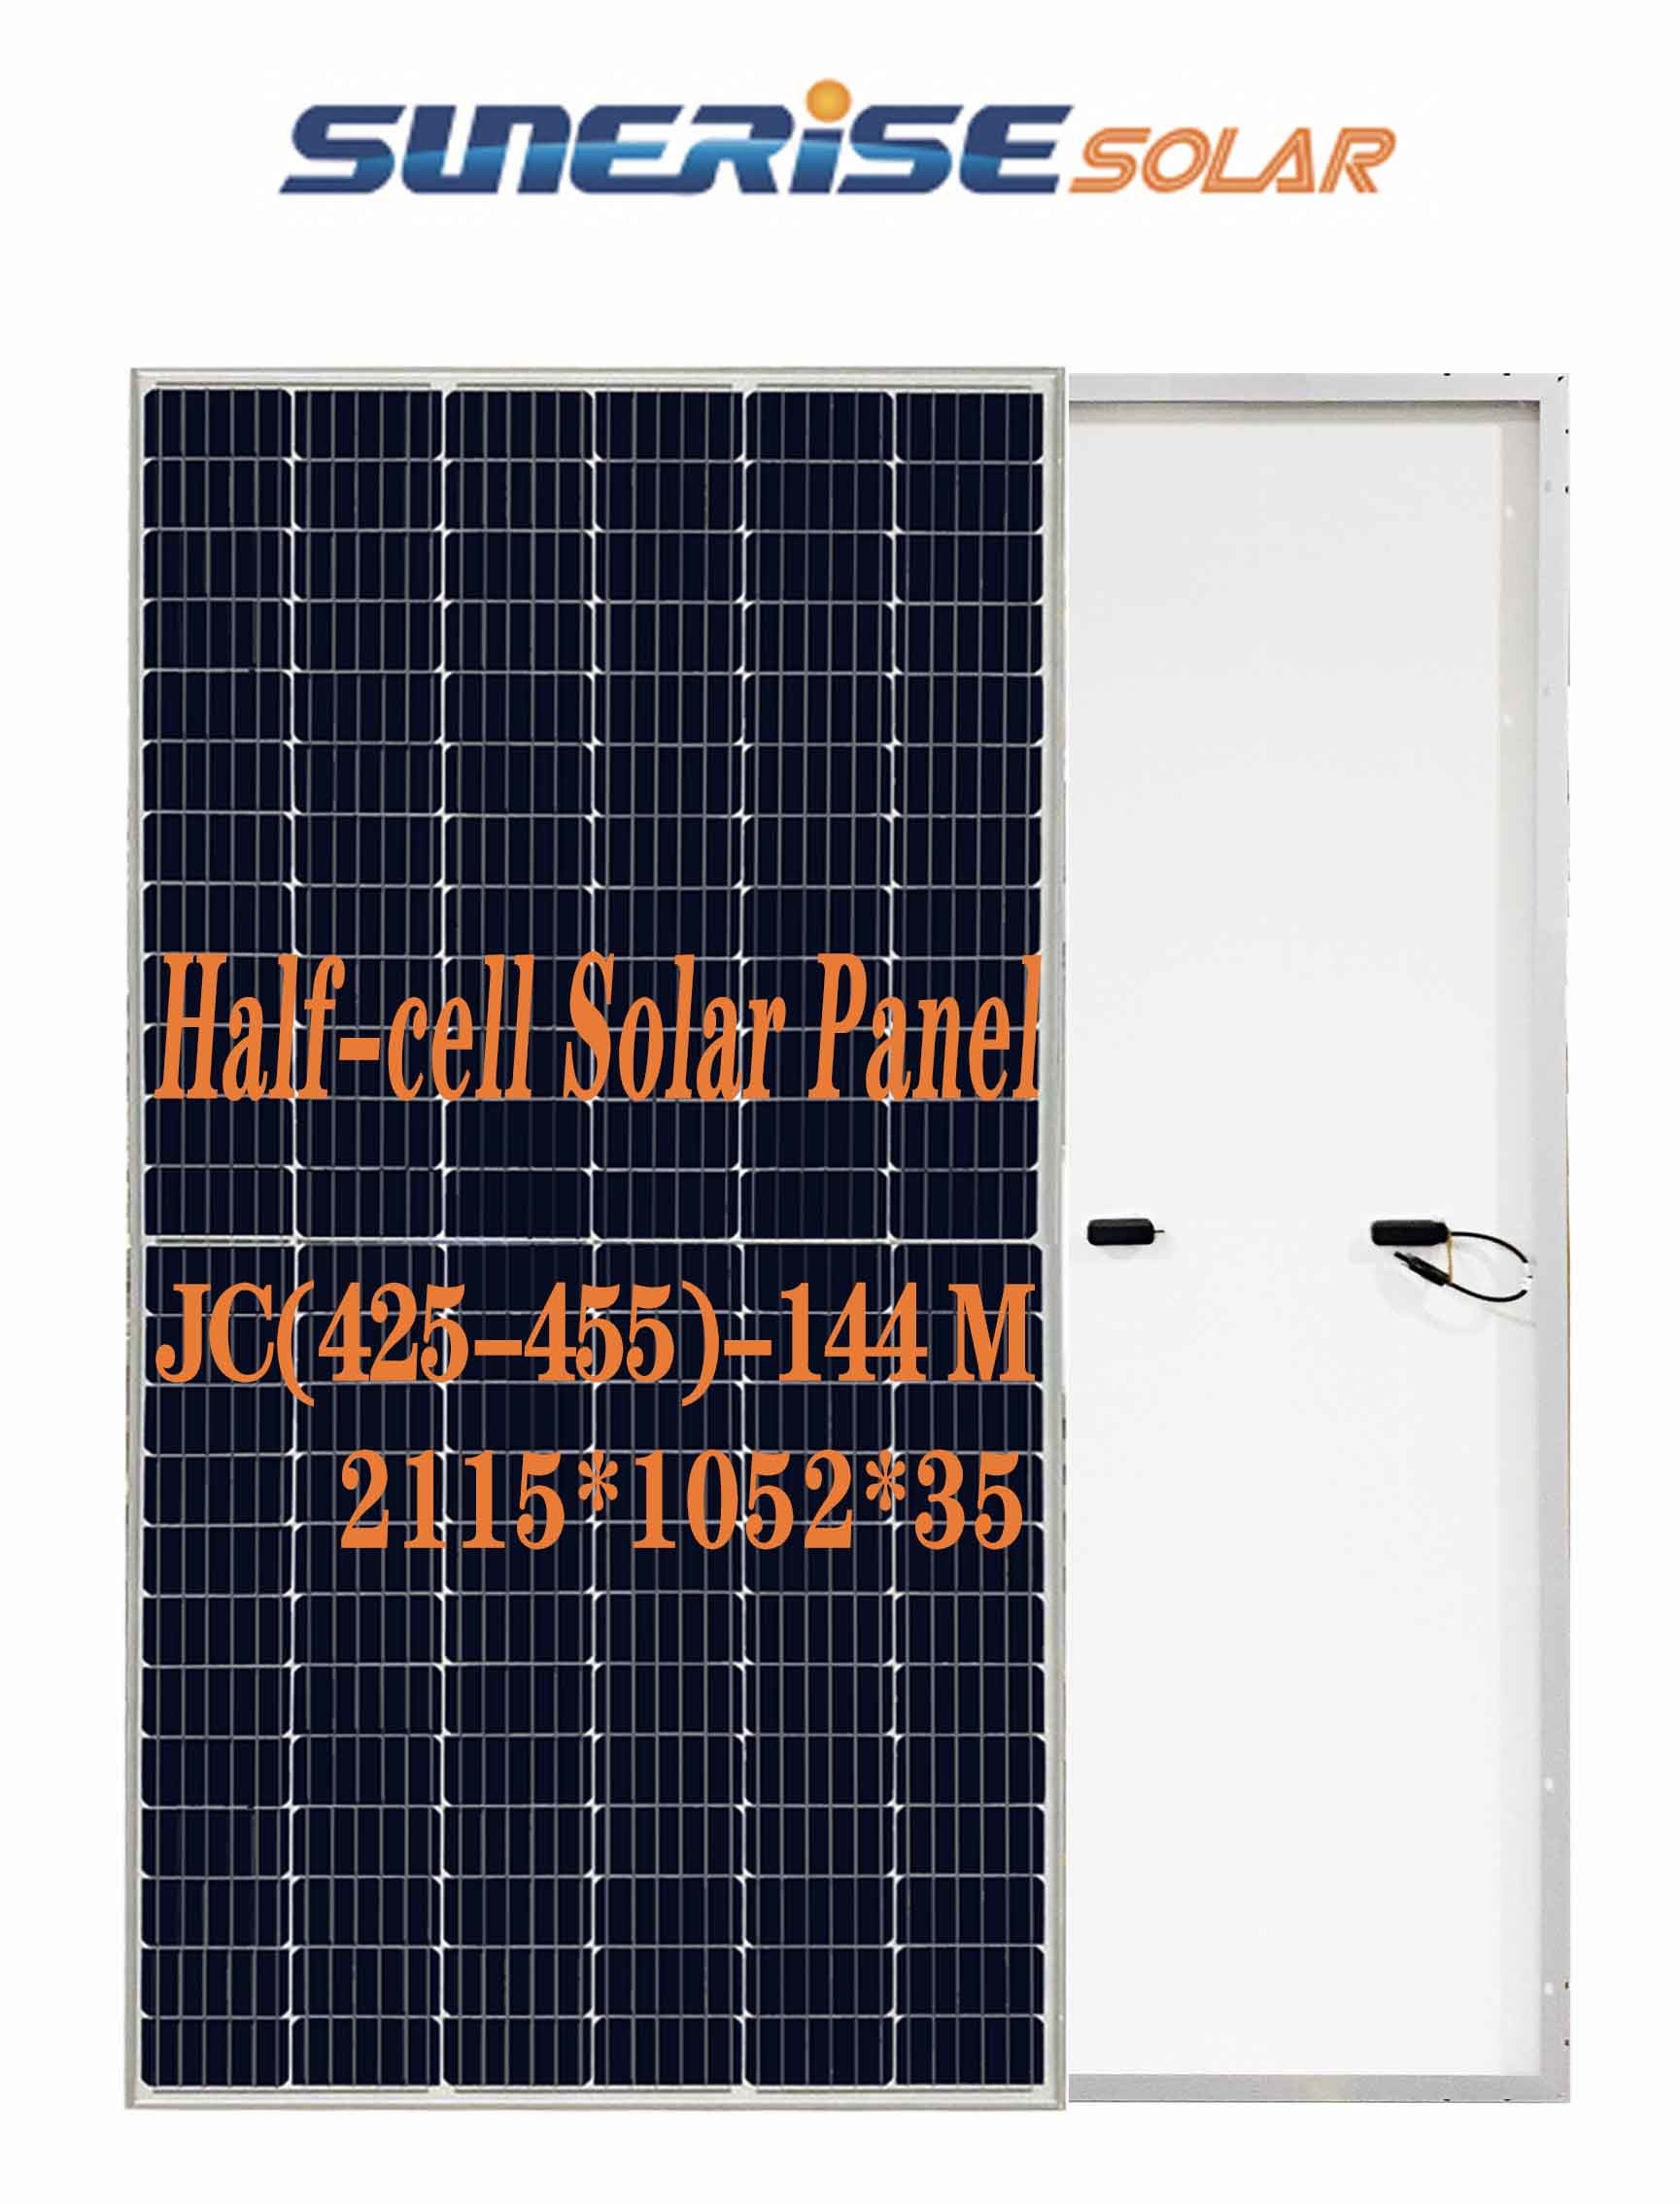 25 Years 144 Cells 440W 24KG Half Cell Solar Module